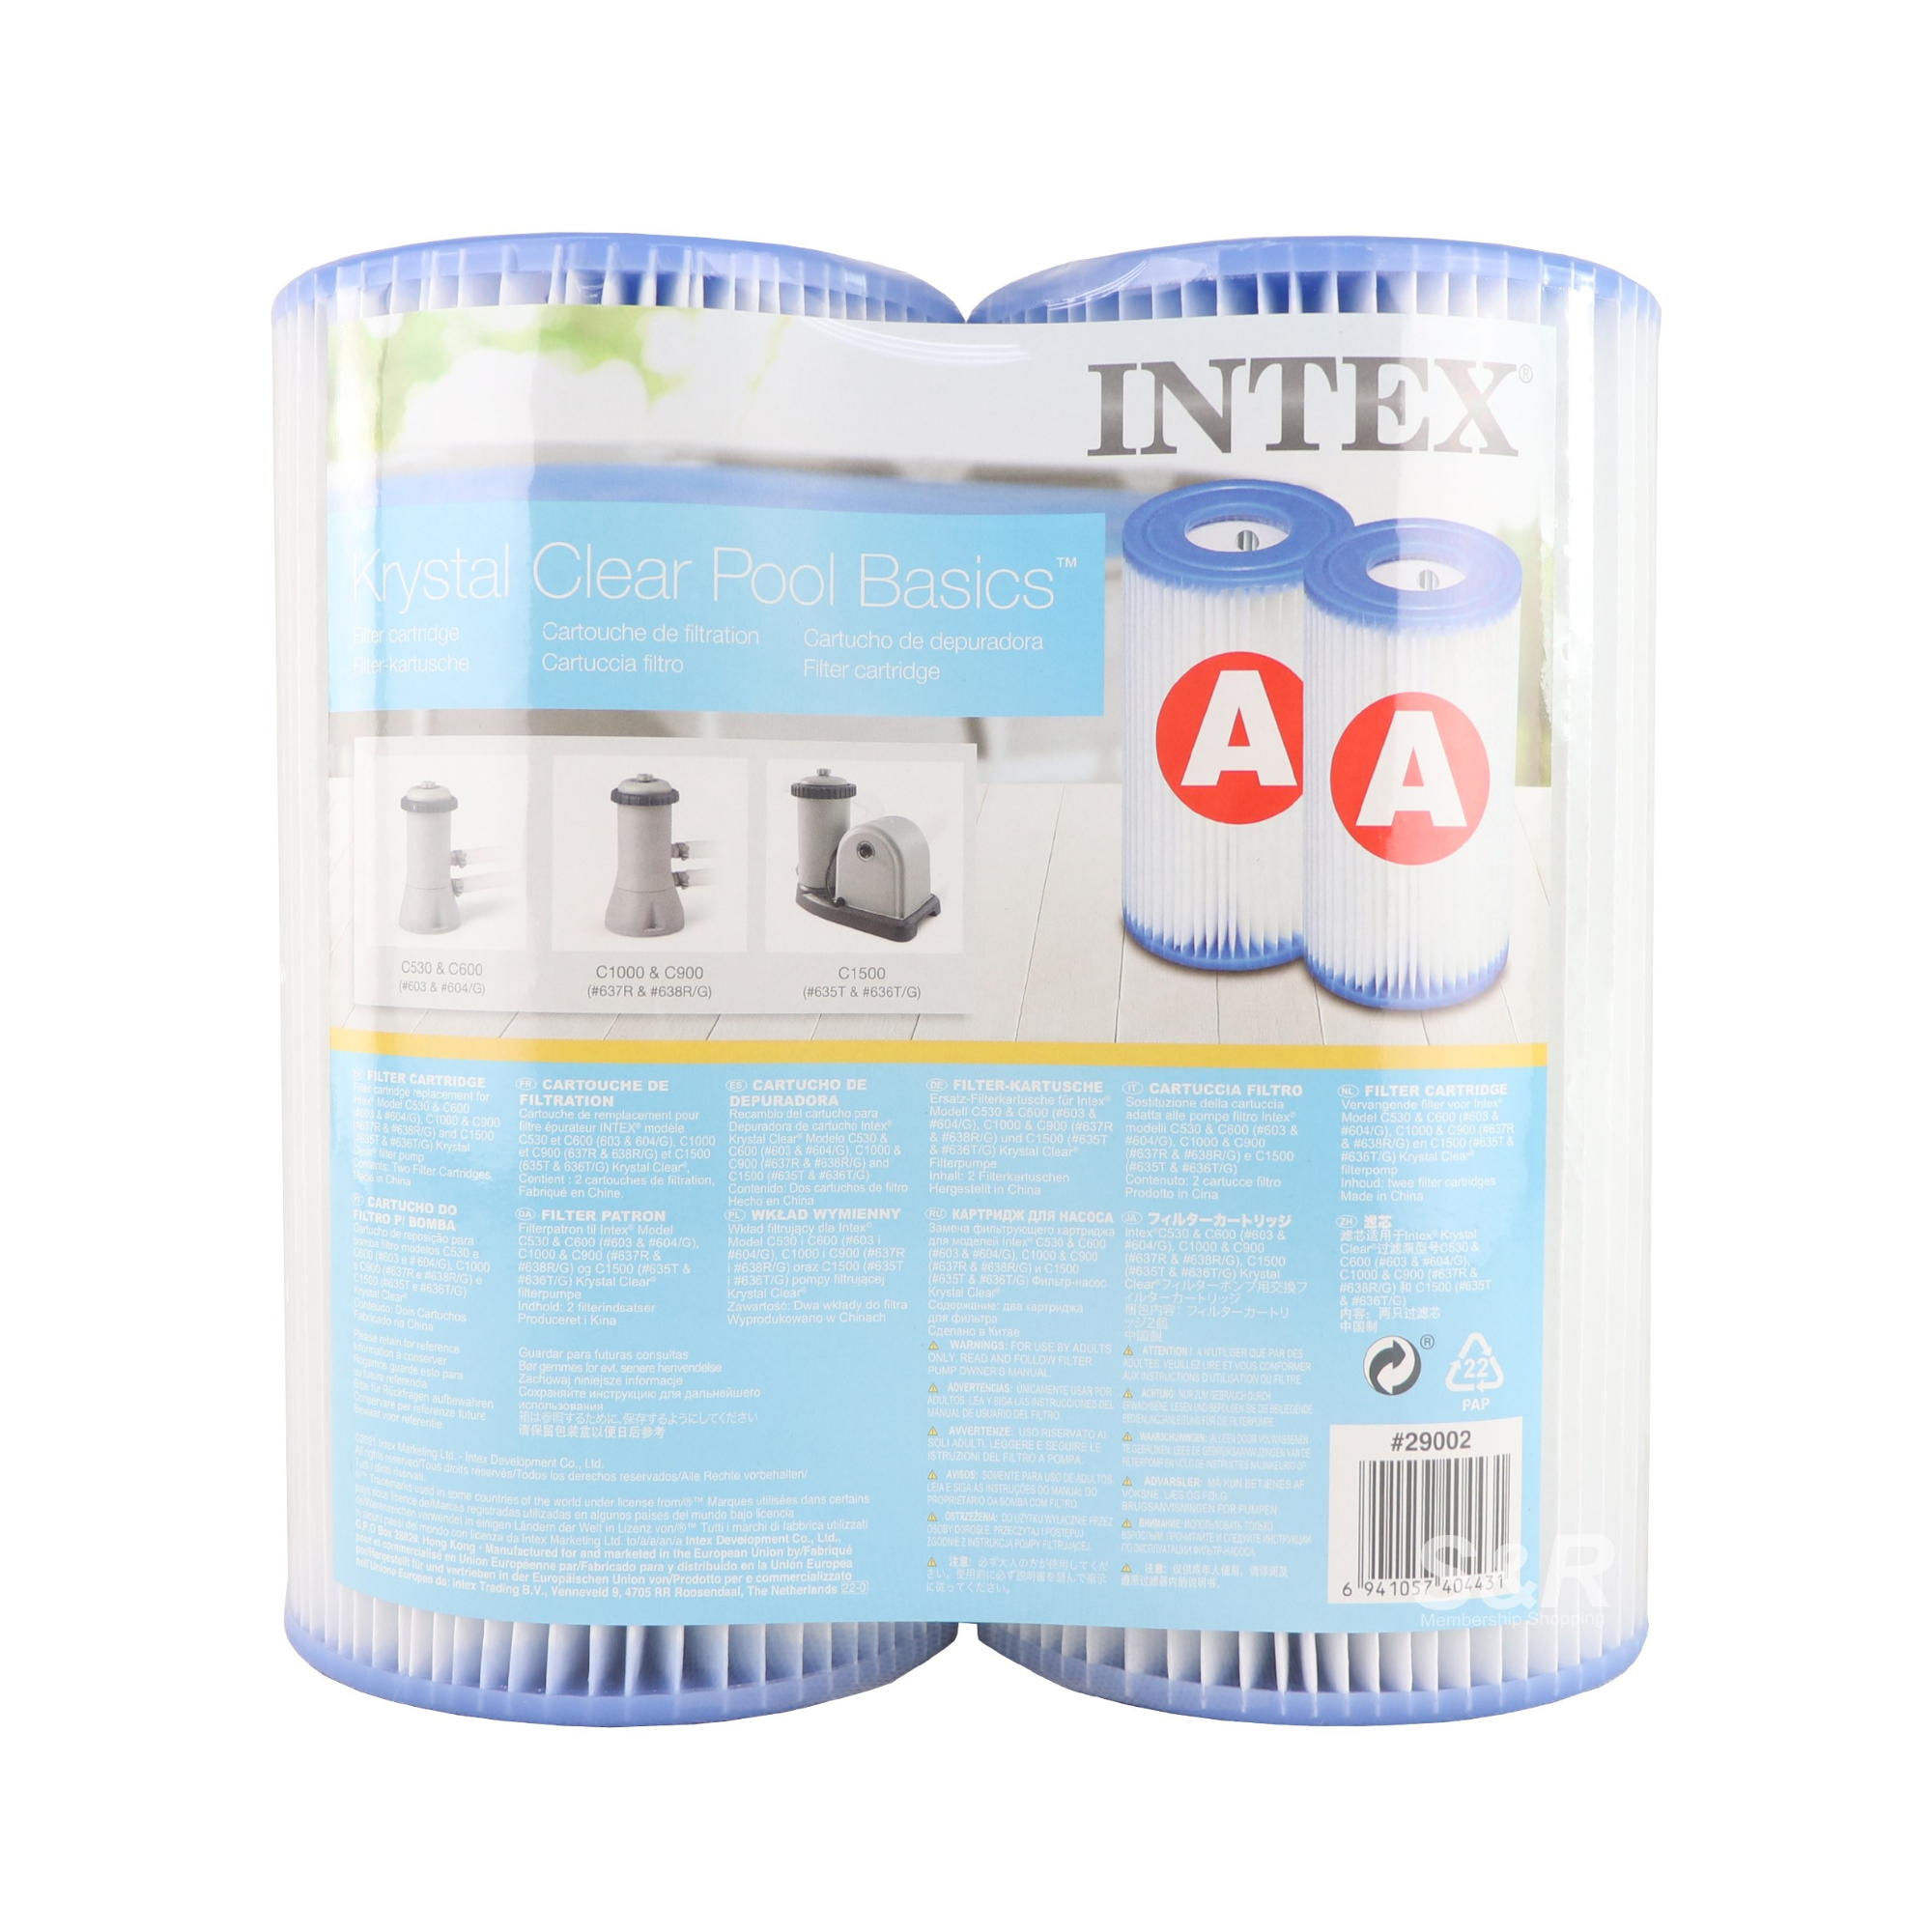 Intex Type A Pool Filter Cartridge 2pcs